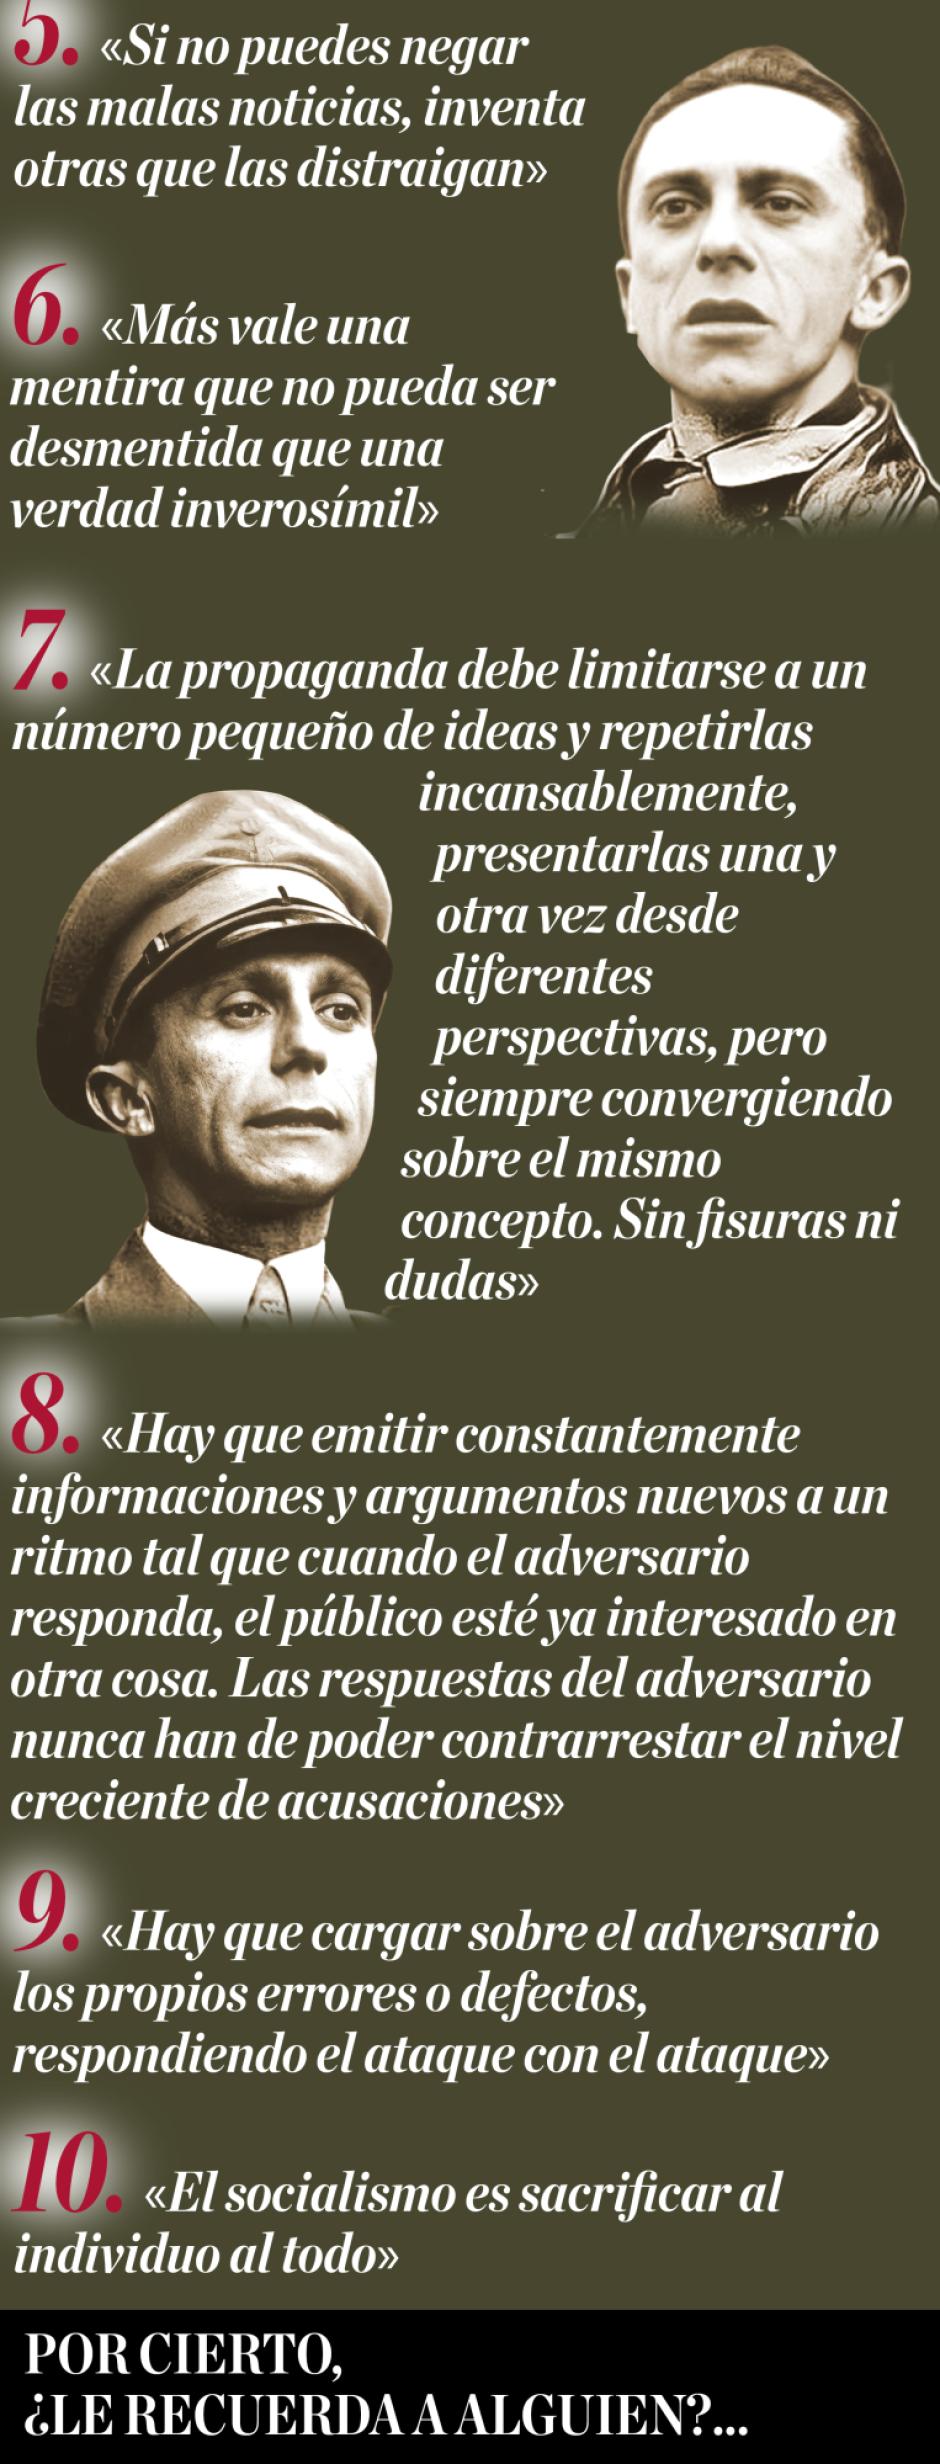 Joseph Goebbels, ministro de propaganda nazi